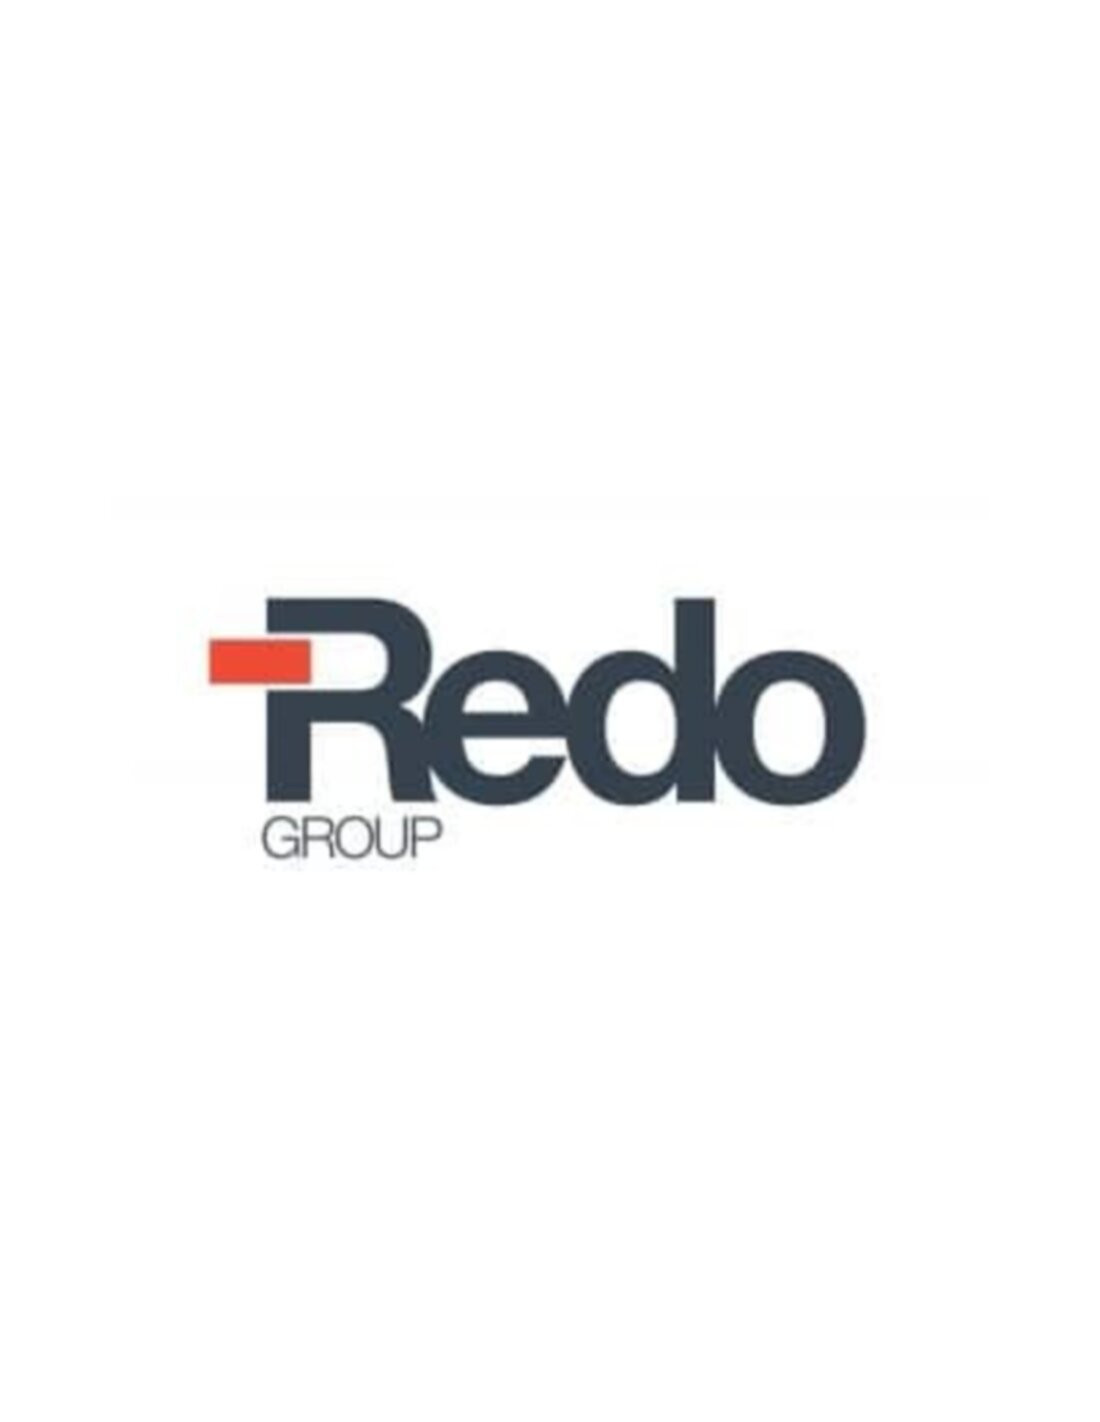 Redo Group